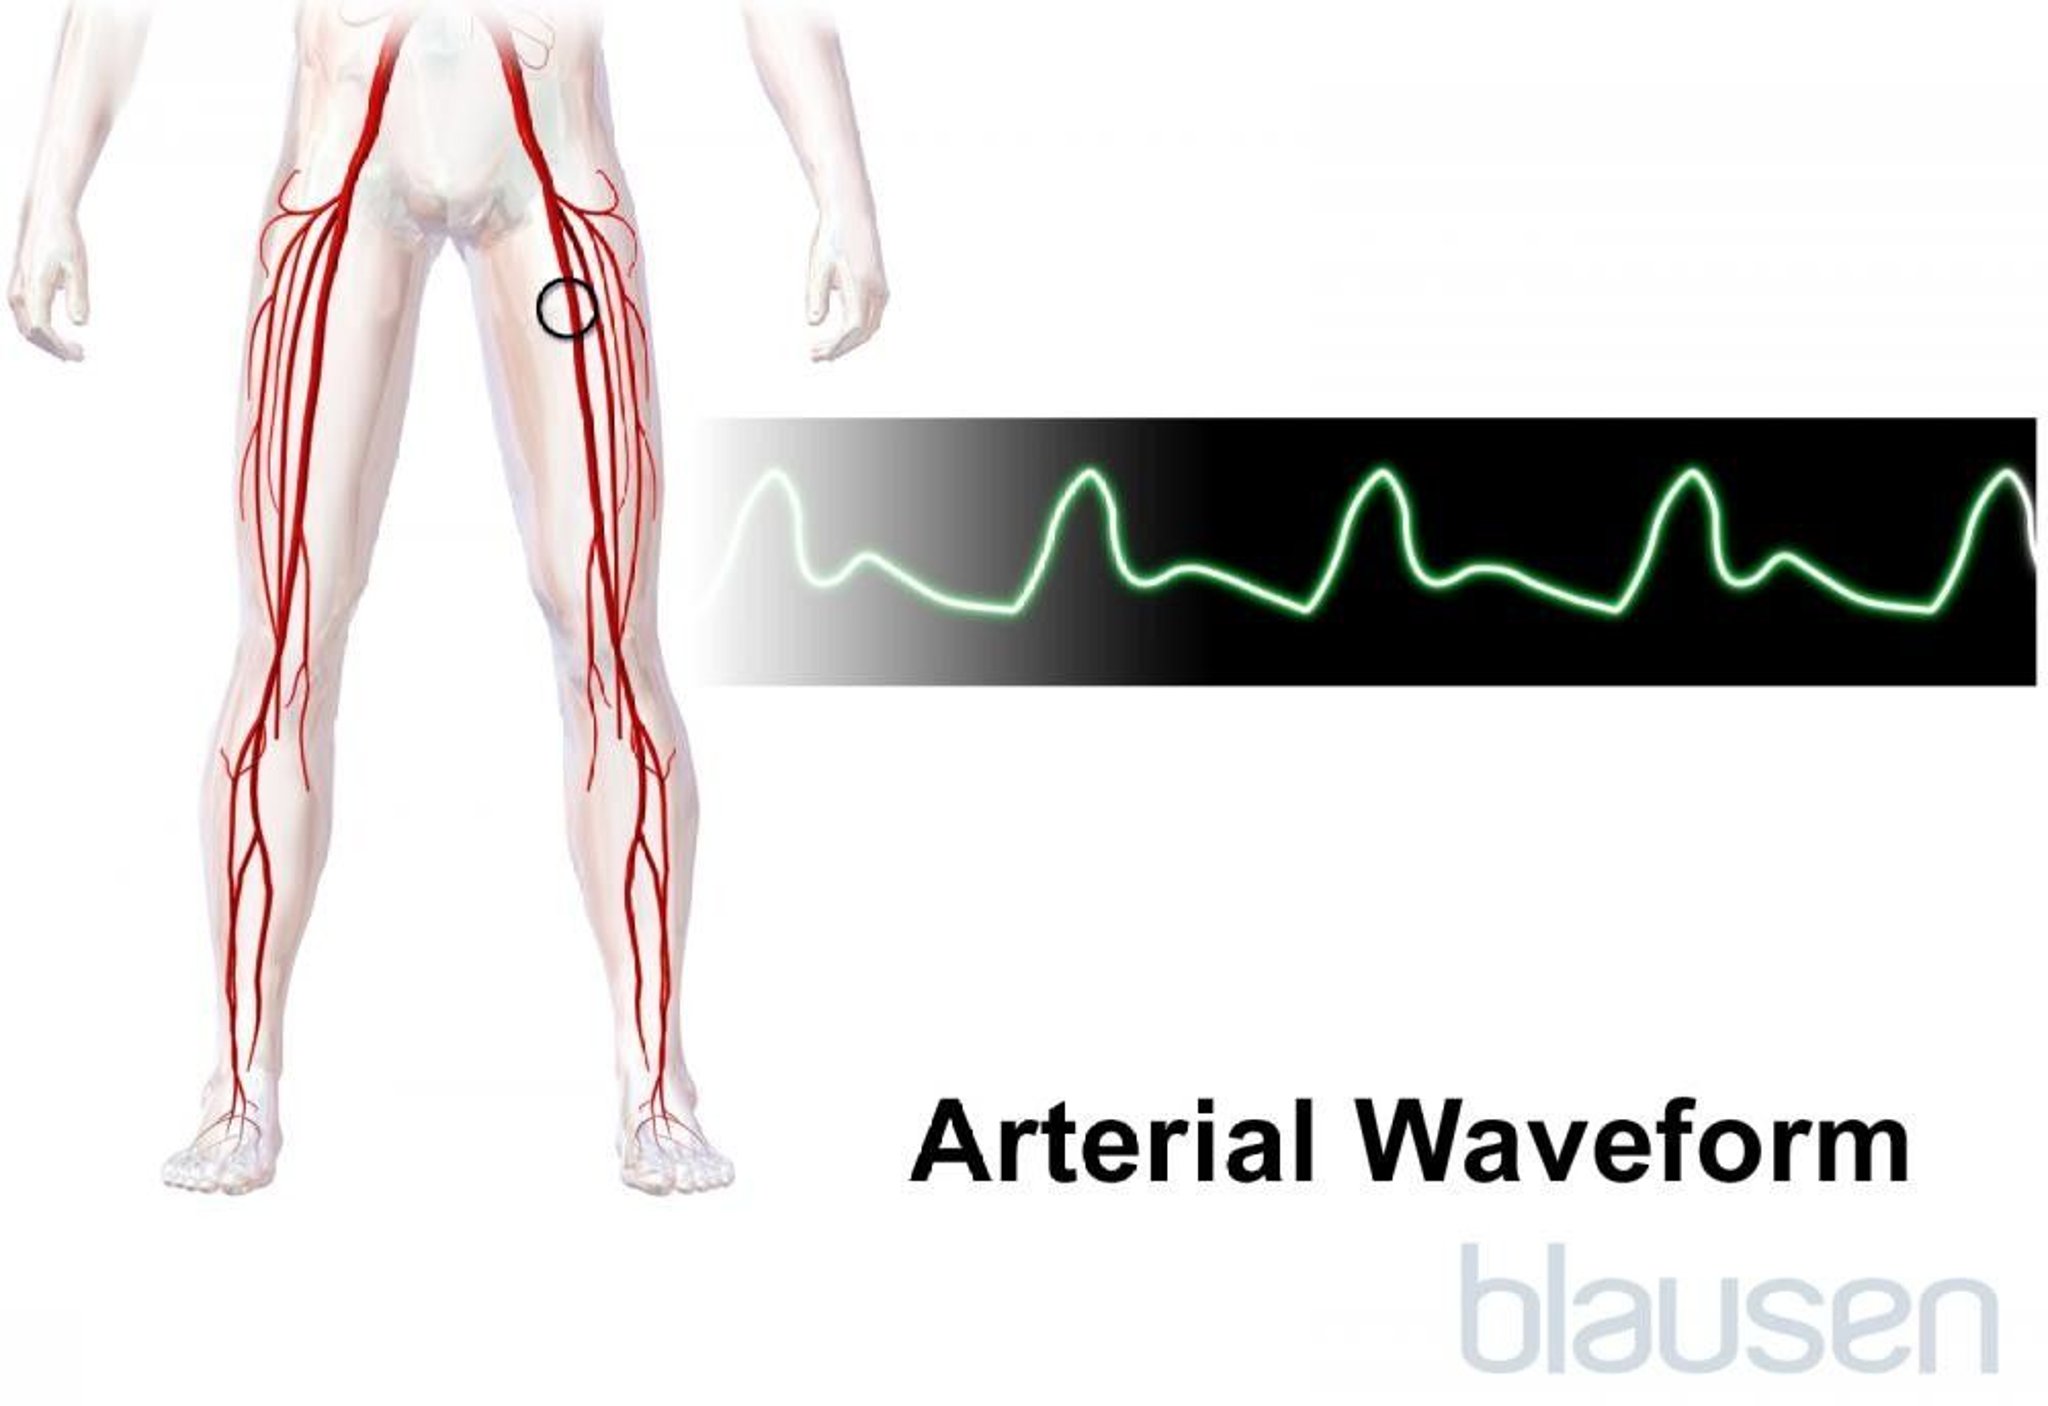 Arterial Waveform